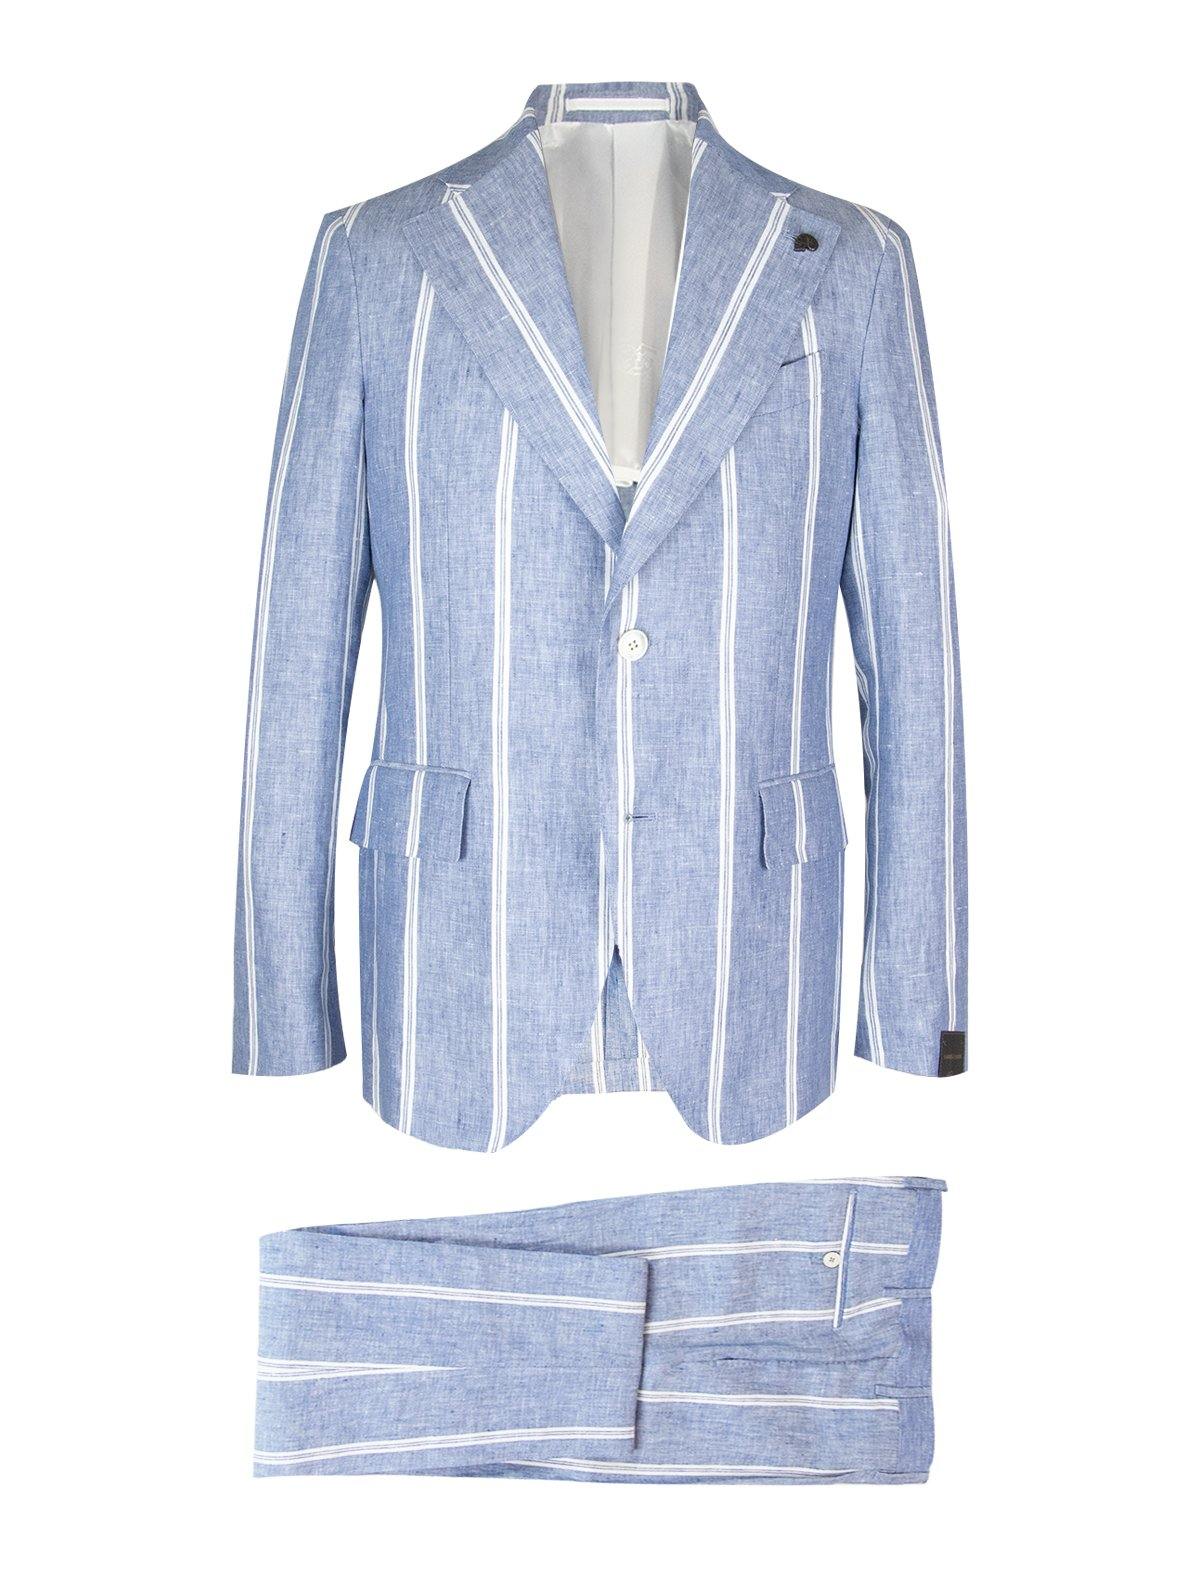 GABRIELE PASINI 2-Piece Linen Suit in Light Blue Ticking Stripes | CLOSET Singapore